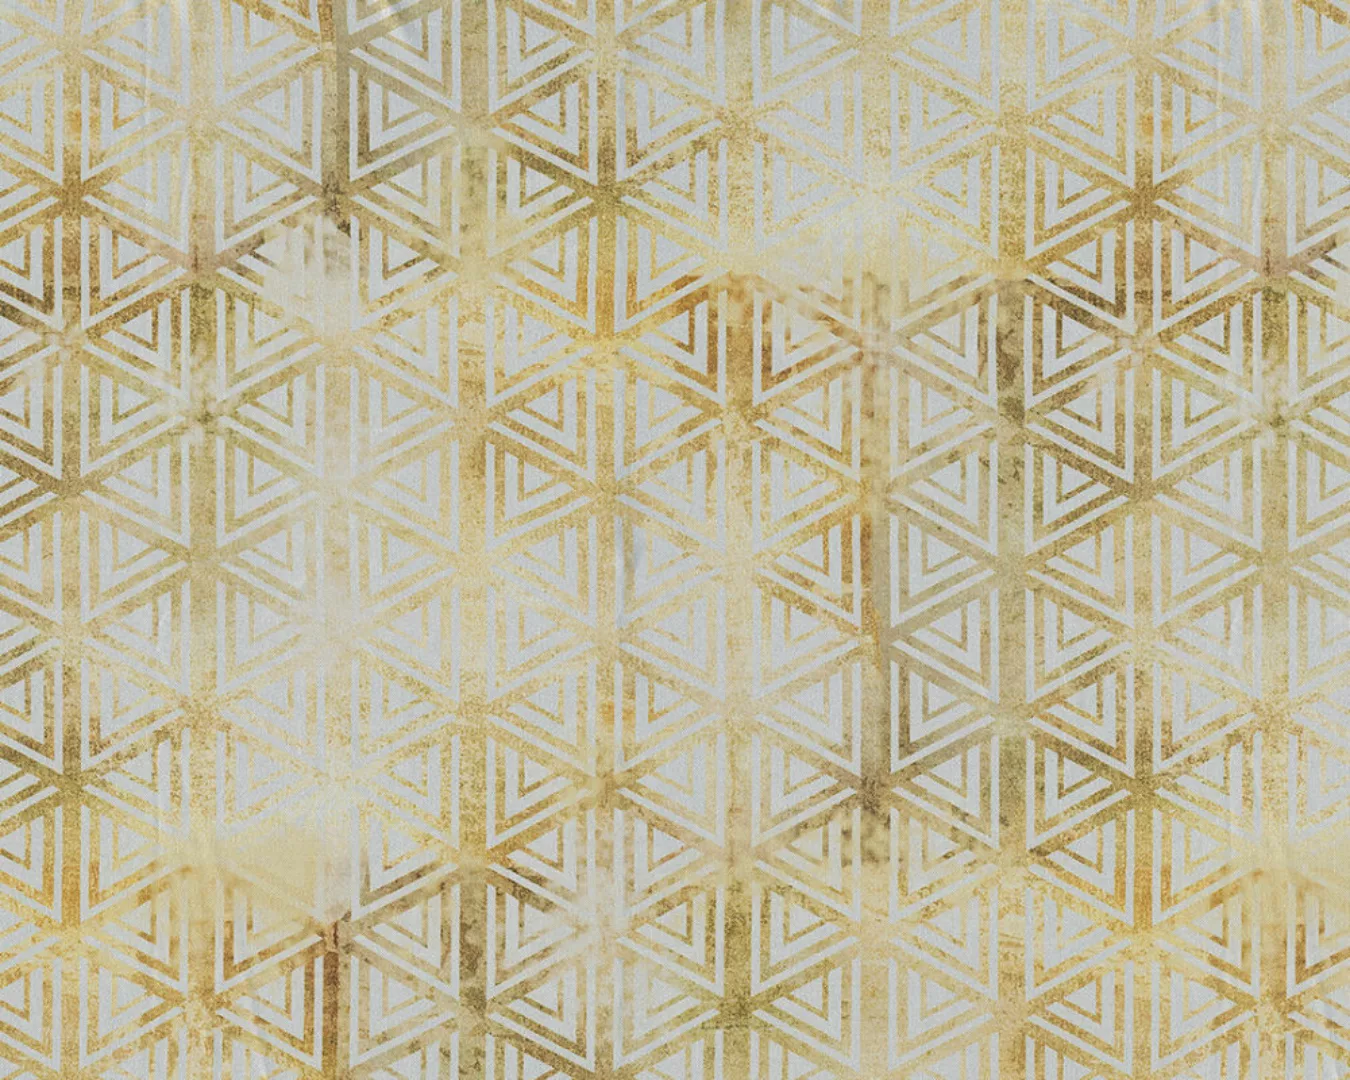 Fototapete "Graf. Dreiecke" 4,00x2,50 m / Glattvlies Perlmutt günstig online kaufen